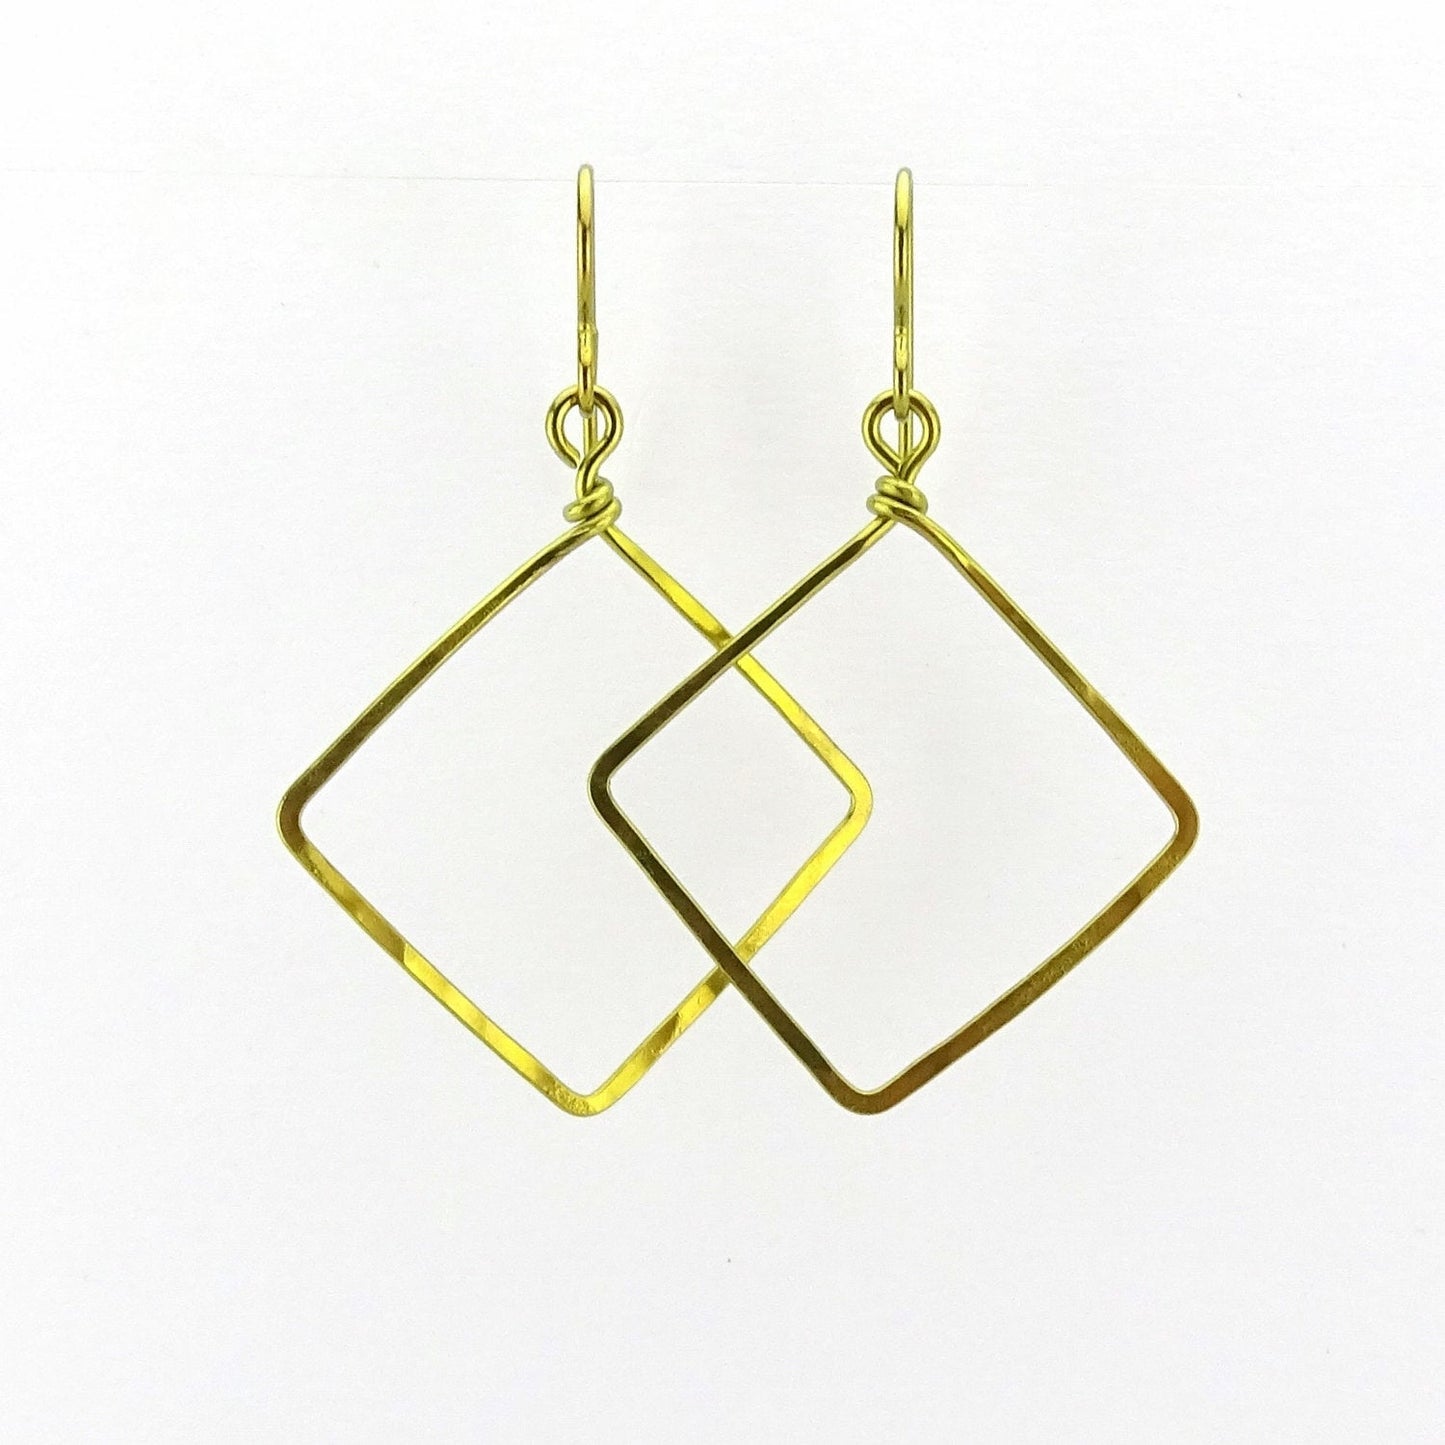 Gold Niobium Square Earrings, Hammered Diamond Shaped Hypoallergenic Earrings for Sensitive Ears, Niobium or Titanium Earrings